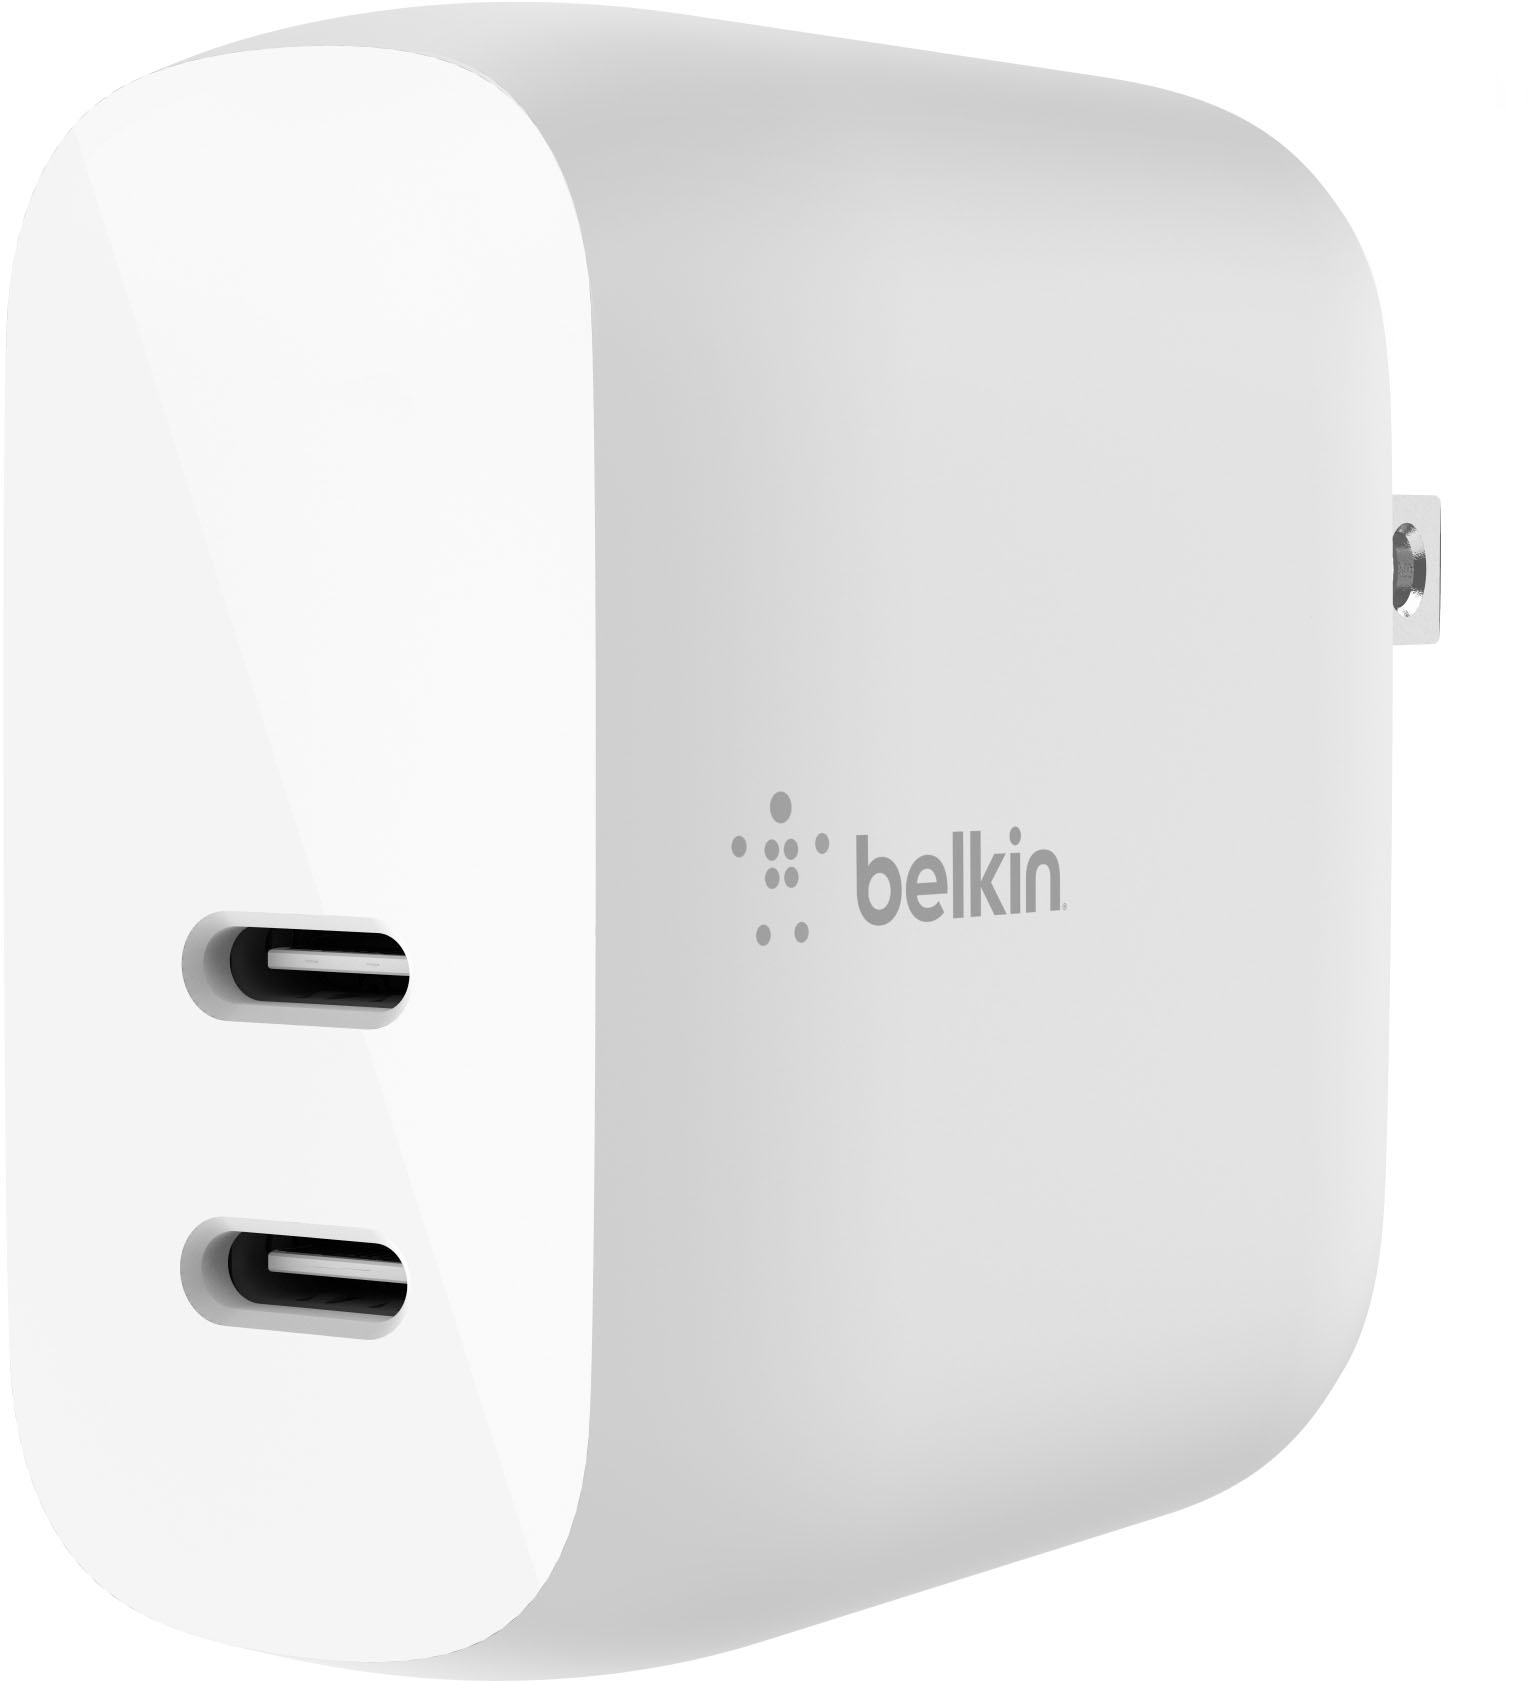 Belkin BOOST CHARGE 30W USB-C PD - White